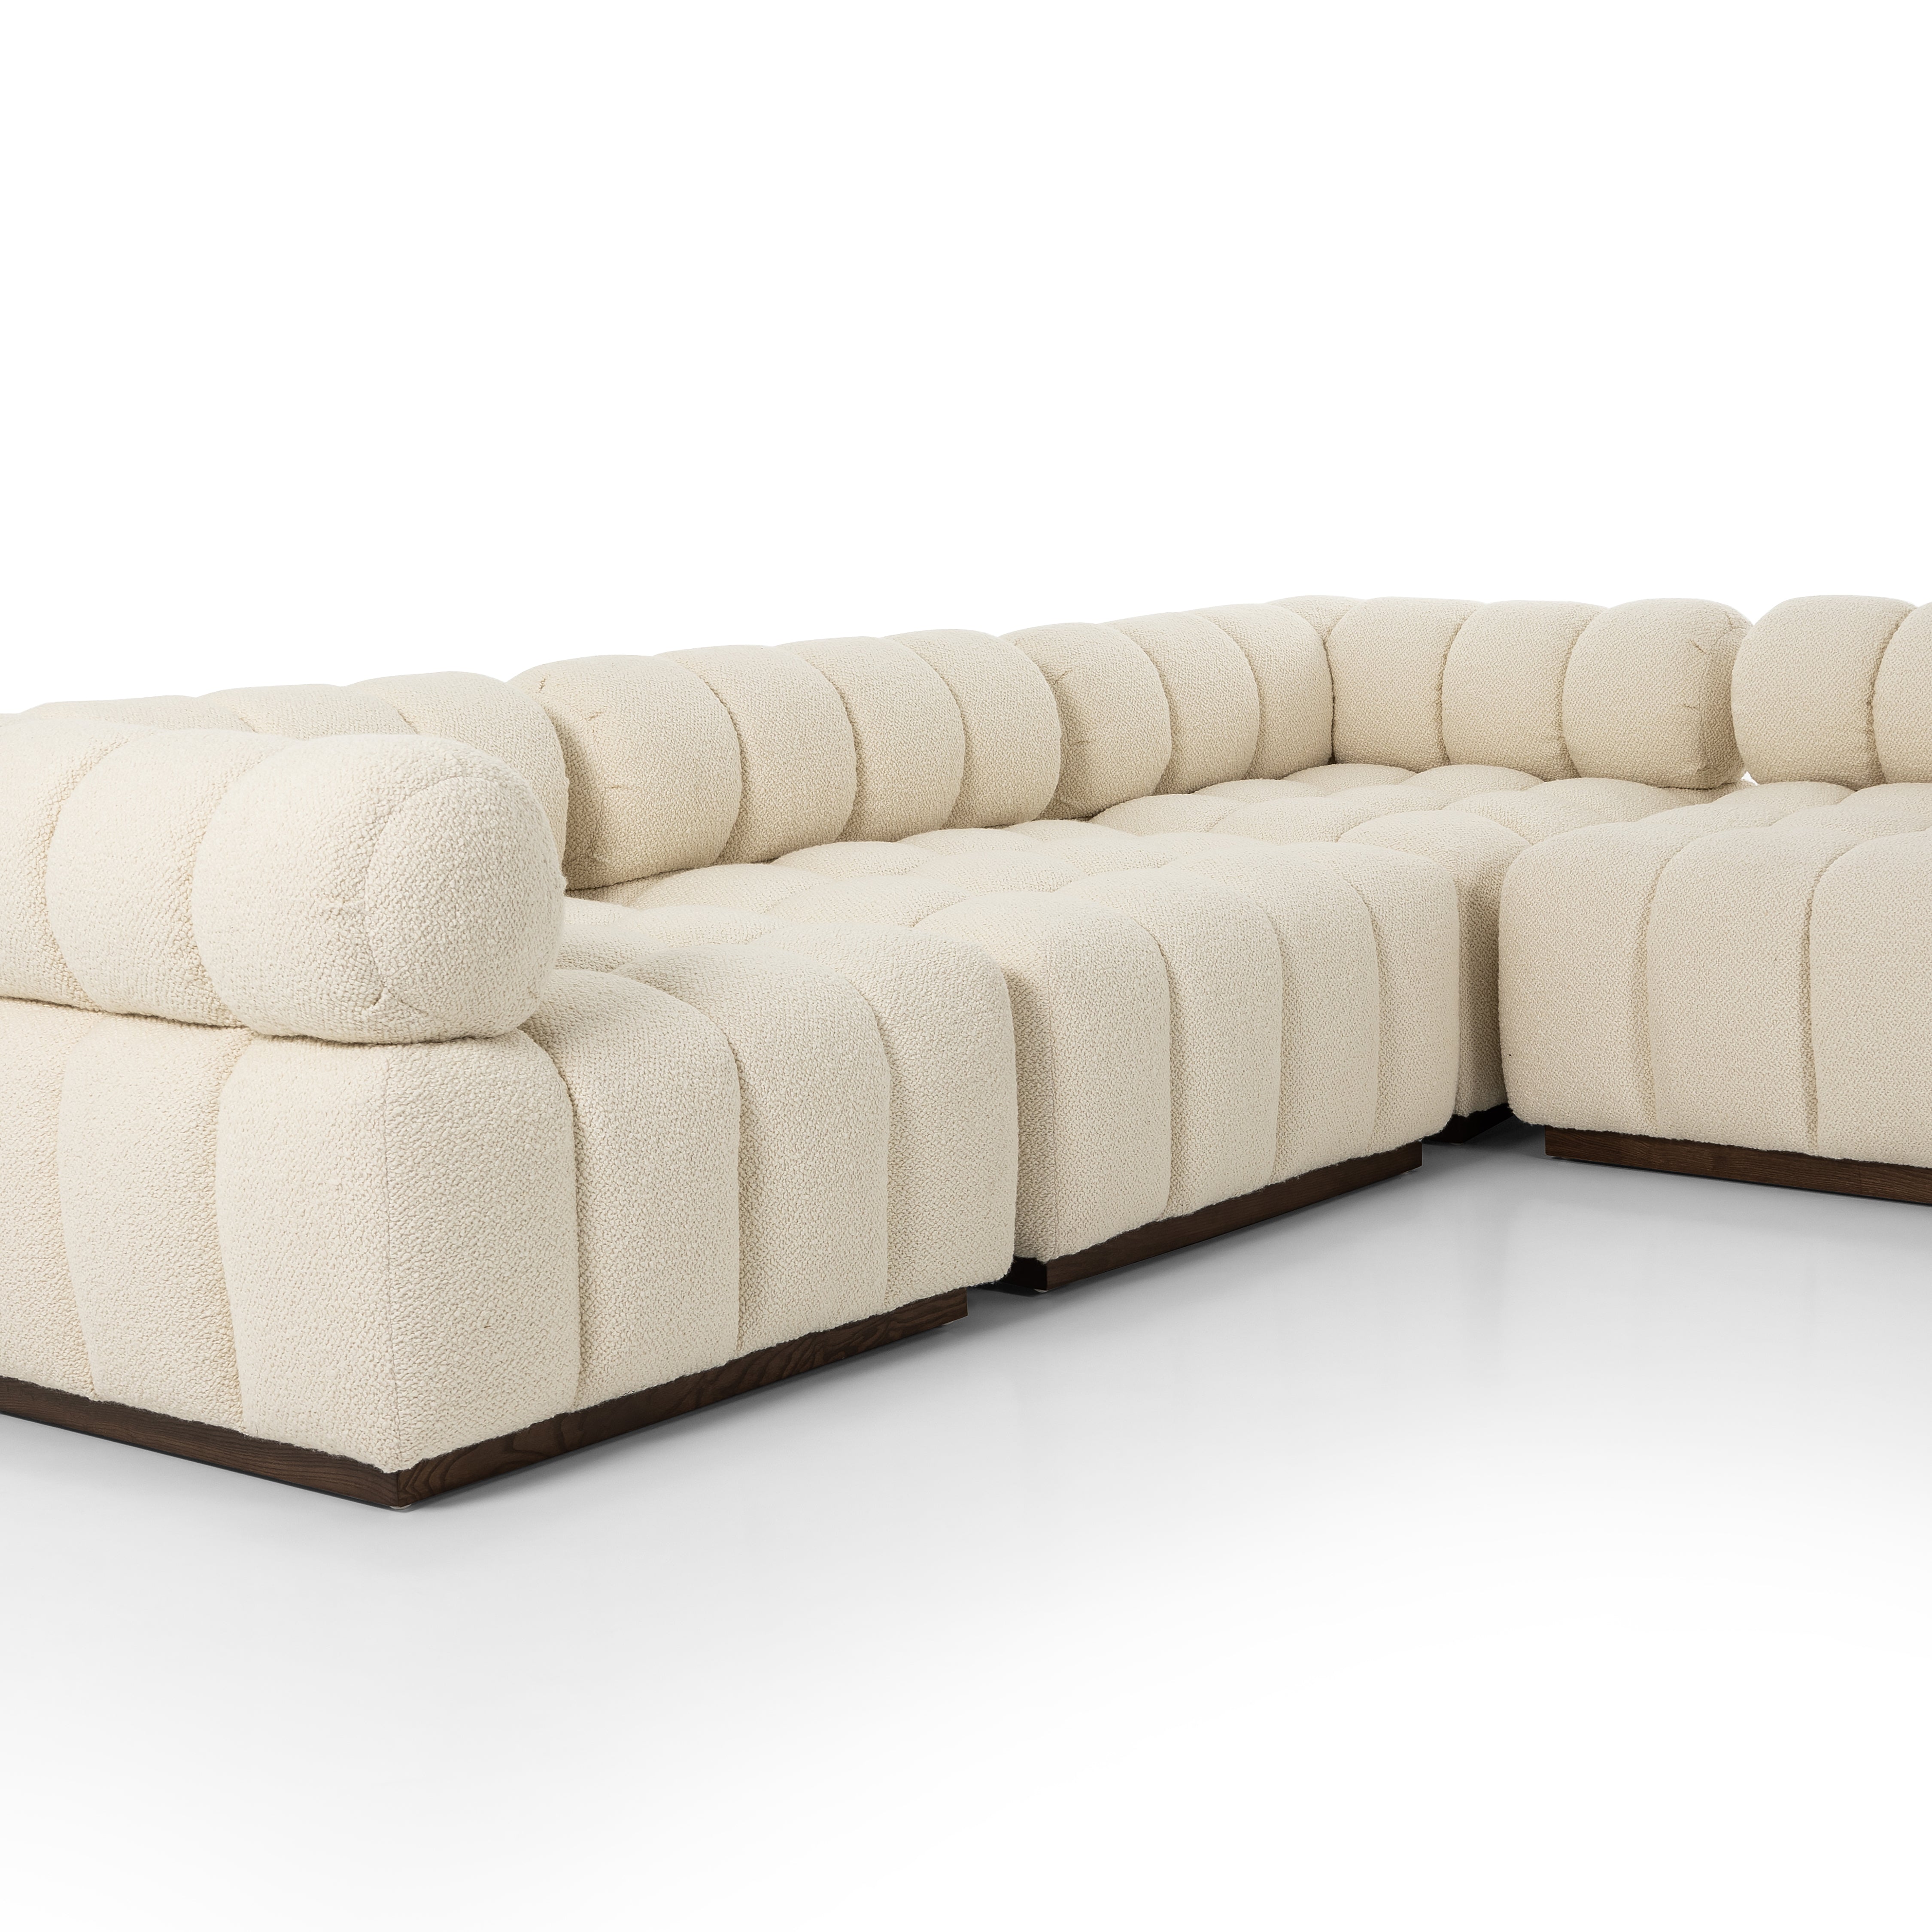 Roma 5 Pc Sectional Sofa-Durham Cream - StyleMeGHD - 